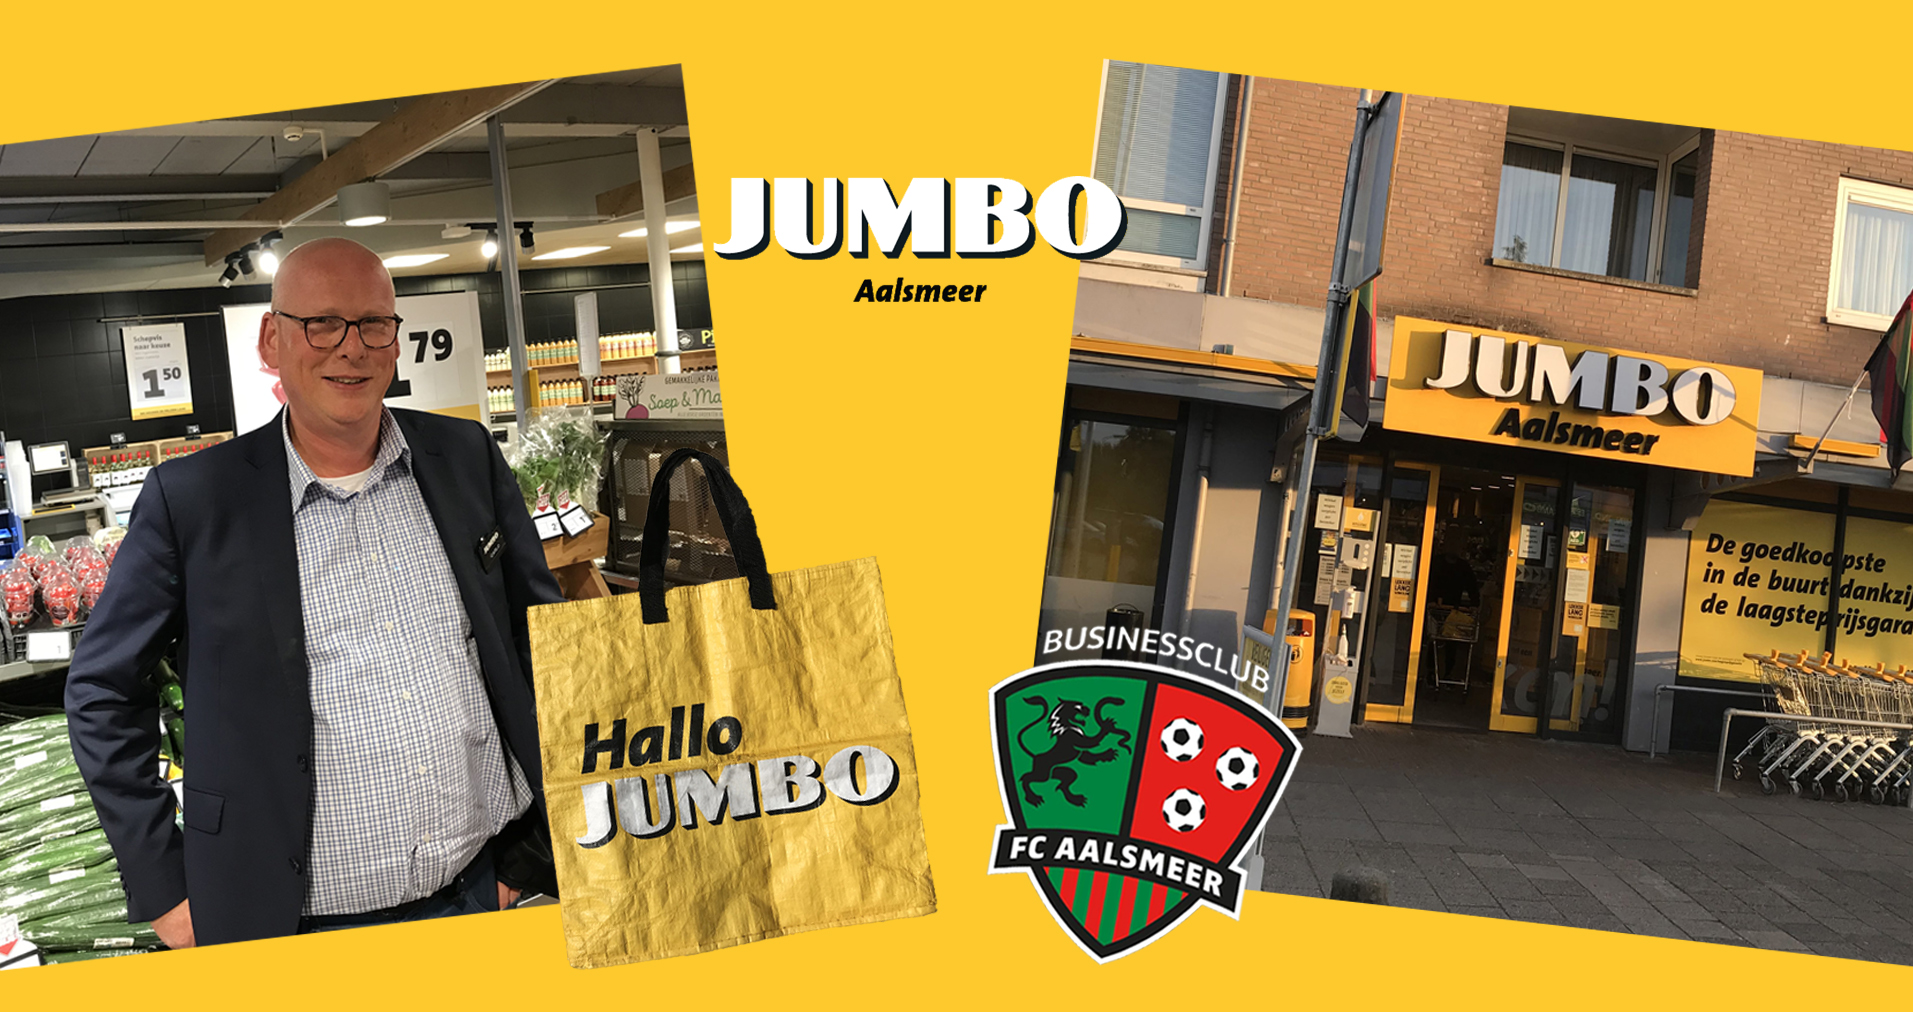 Jumbo-Businessclub-fcaalsmeer